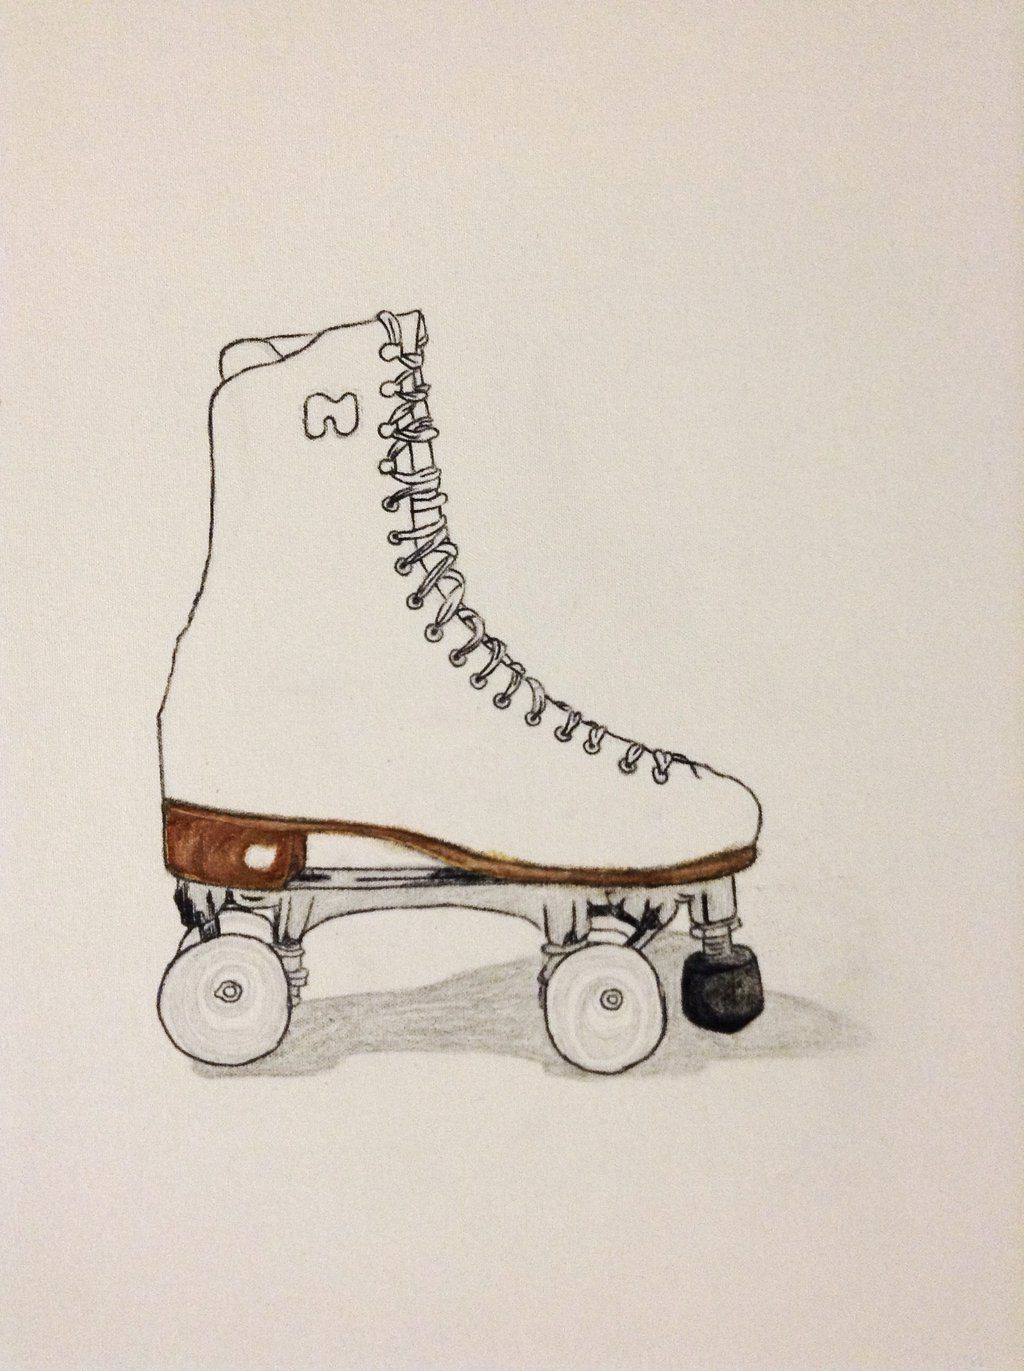 Roller Skates Image Drawing